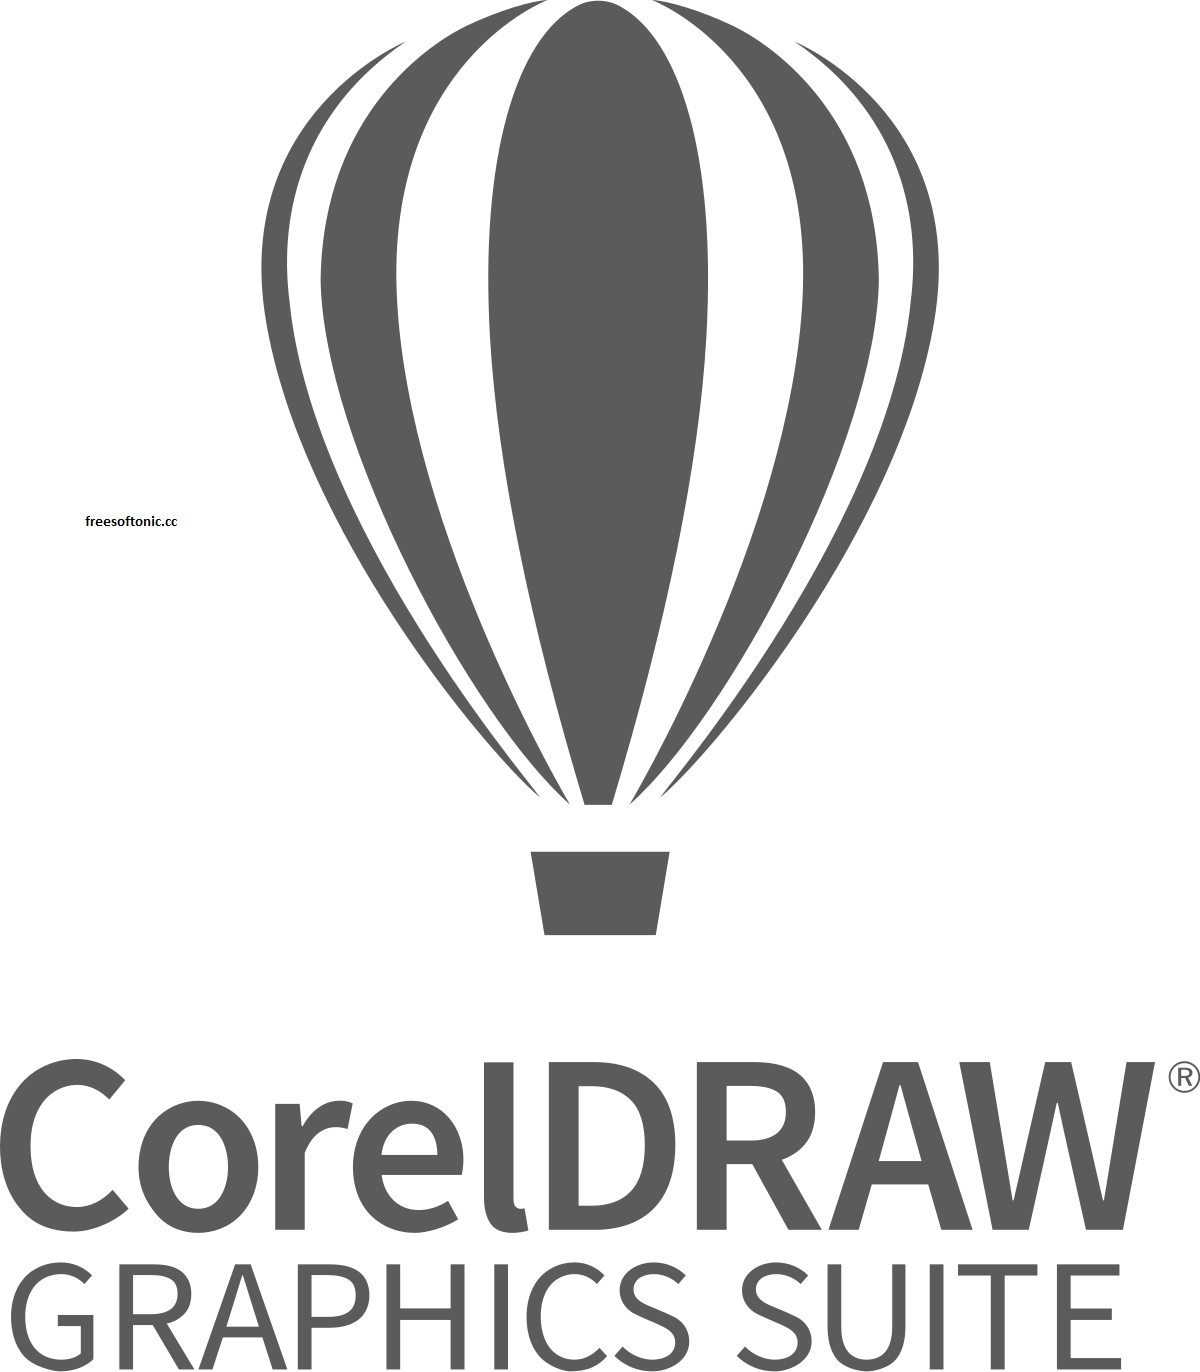 coreldraw x8 free download with crack